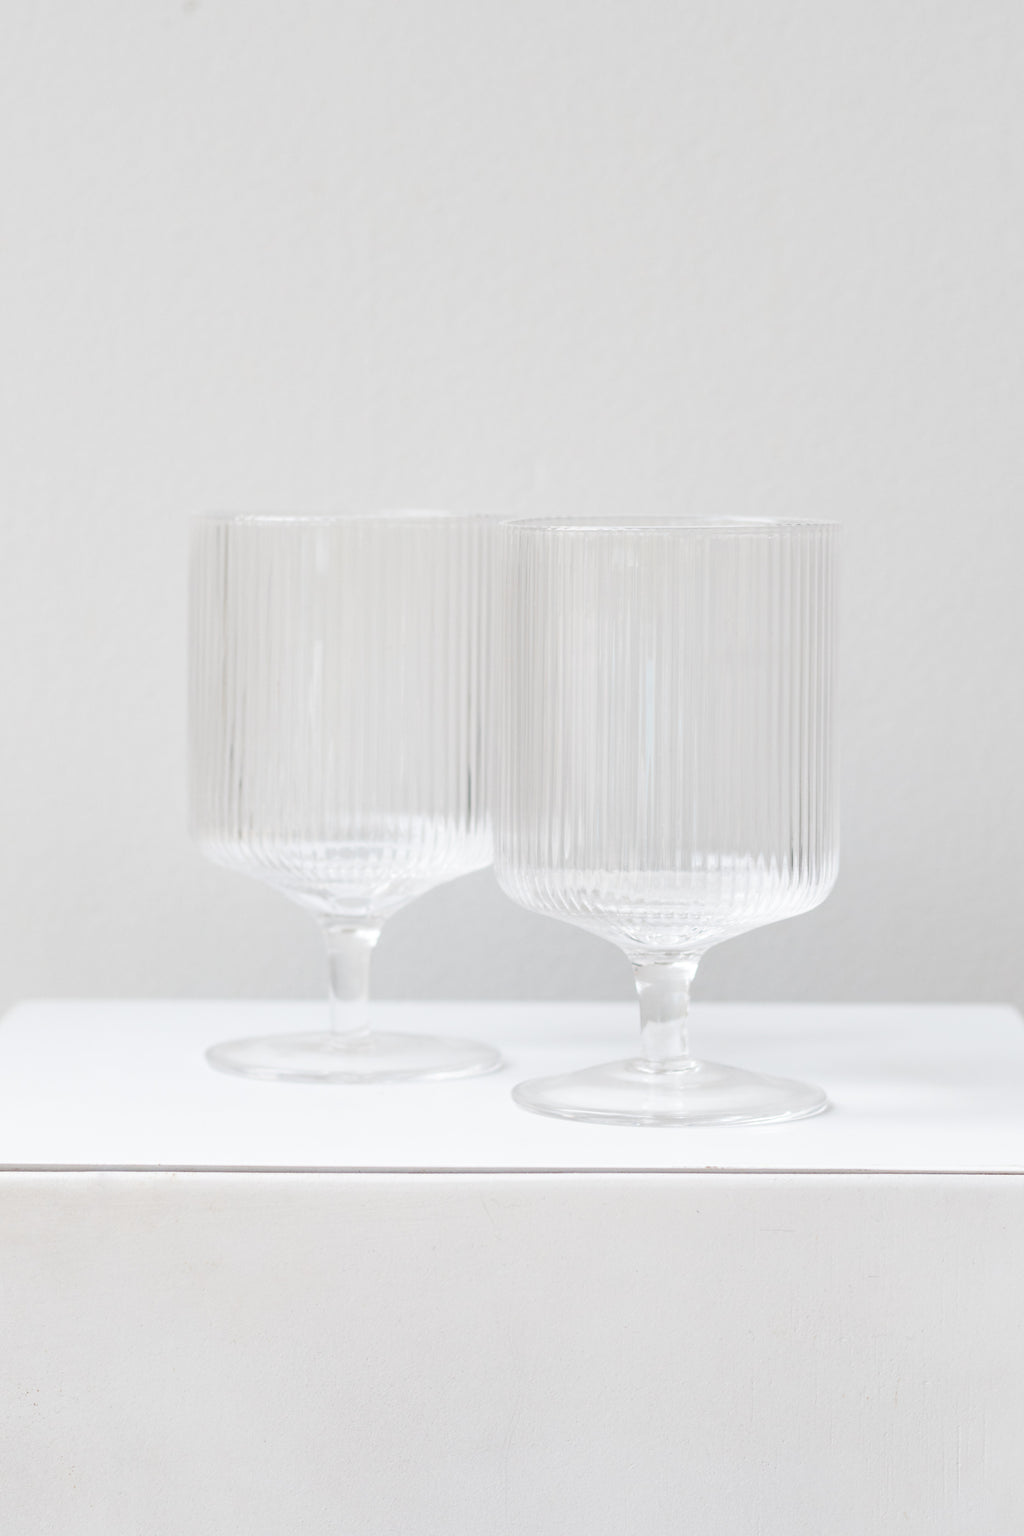 2 Pcs Ripple Drinking Glasses Set - 9 oz Modern Kitchen Vintage